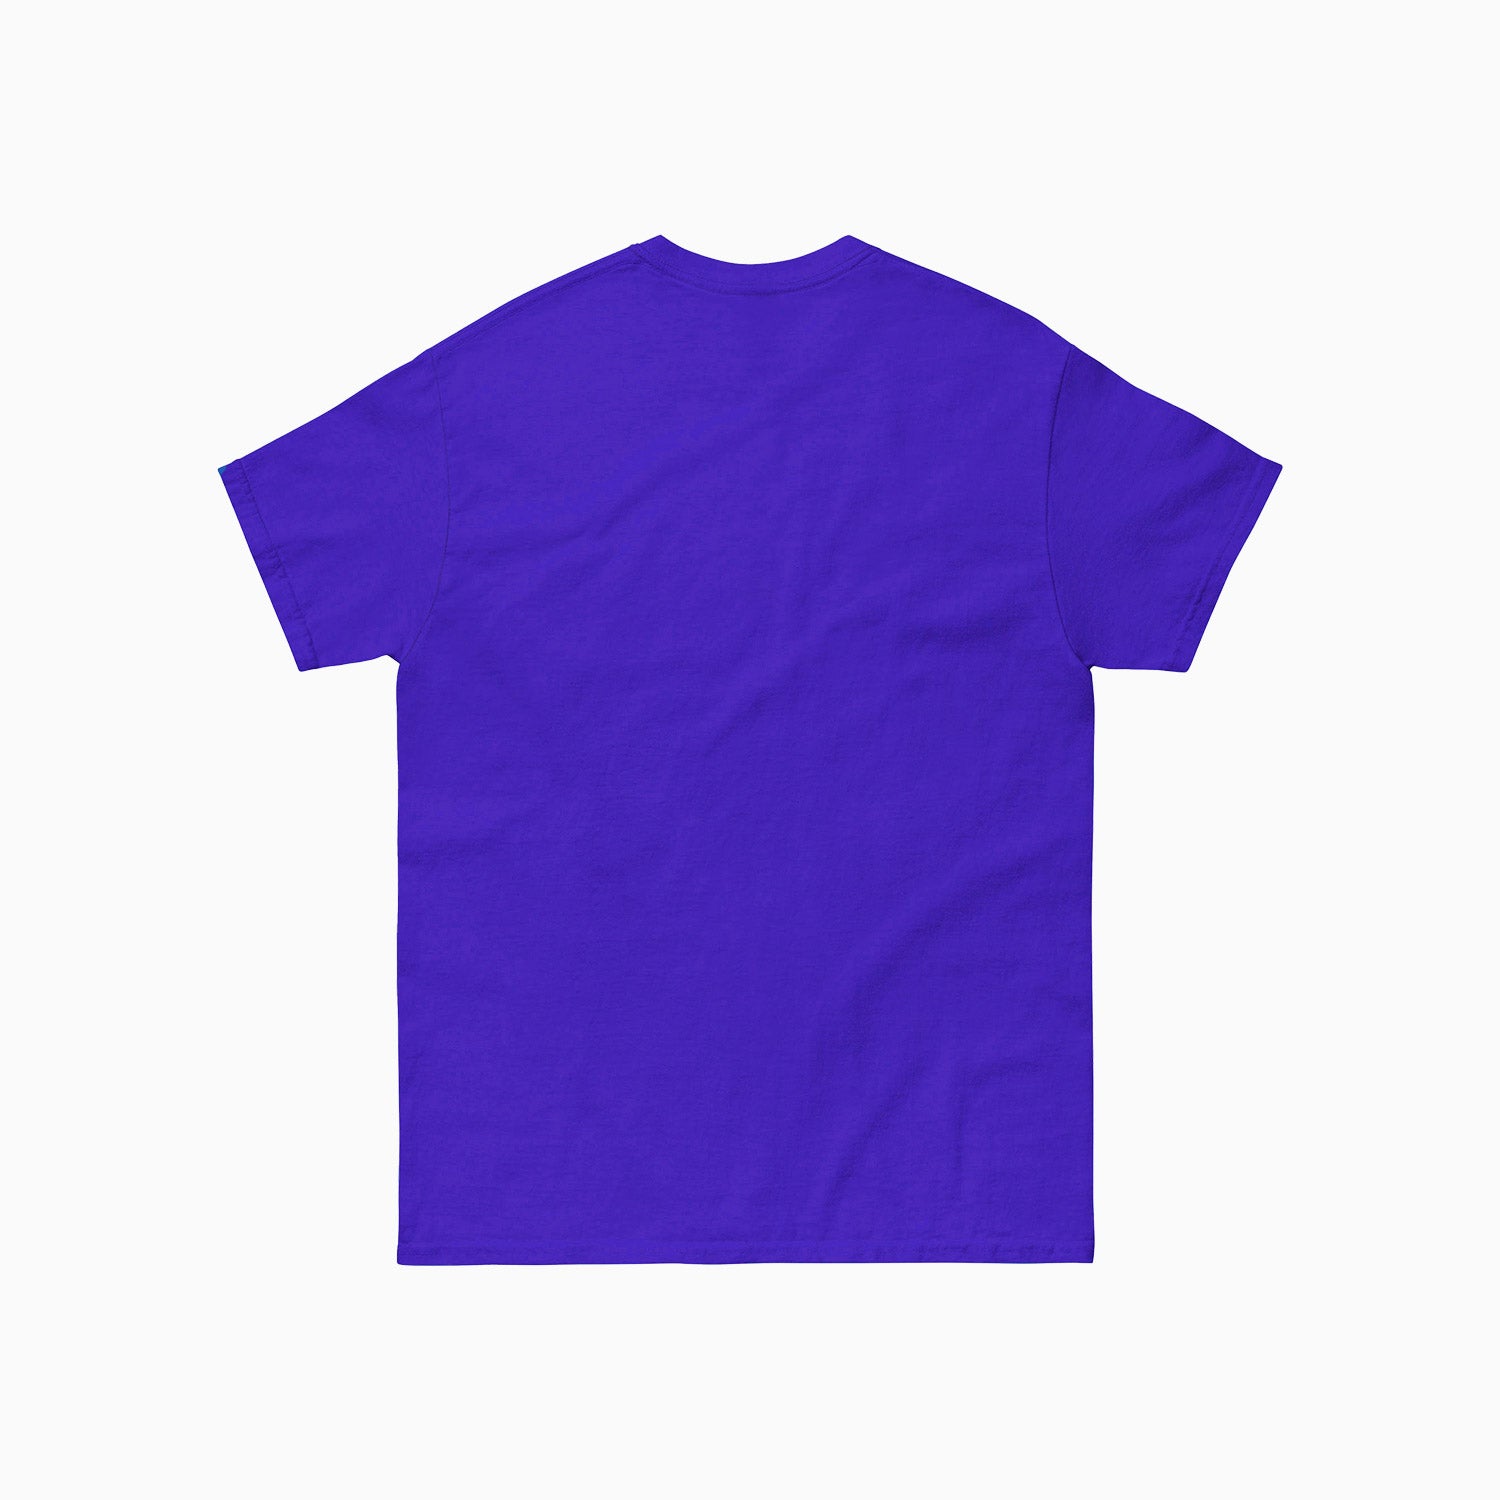 savar-mens-black-white-valentino-logo-printed-purple-t-shirt-st230-480